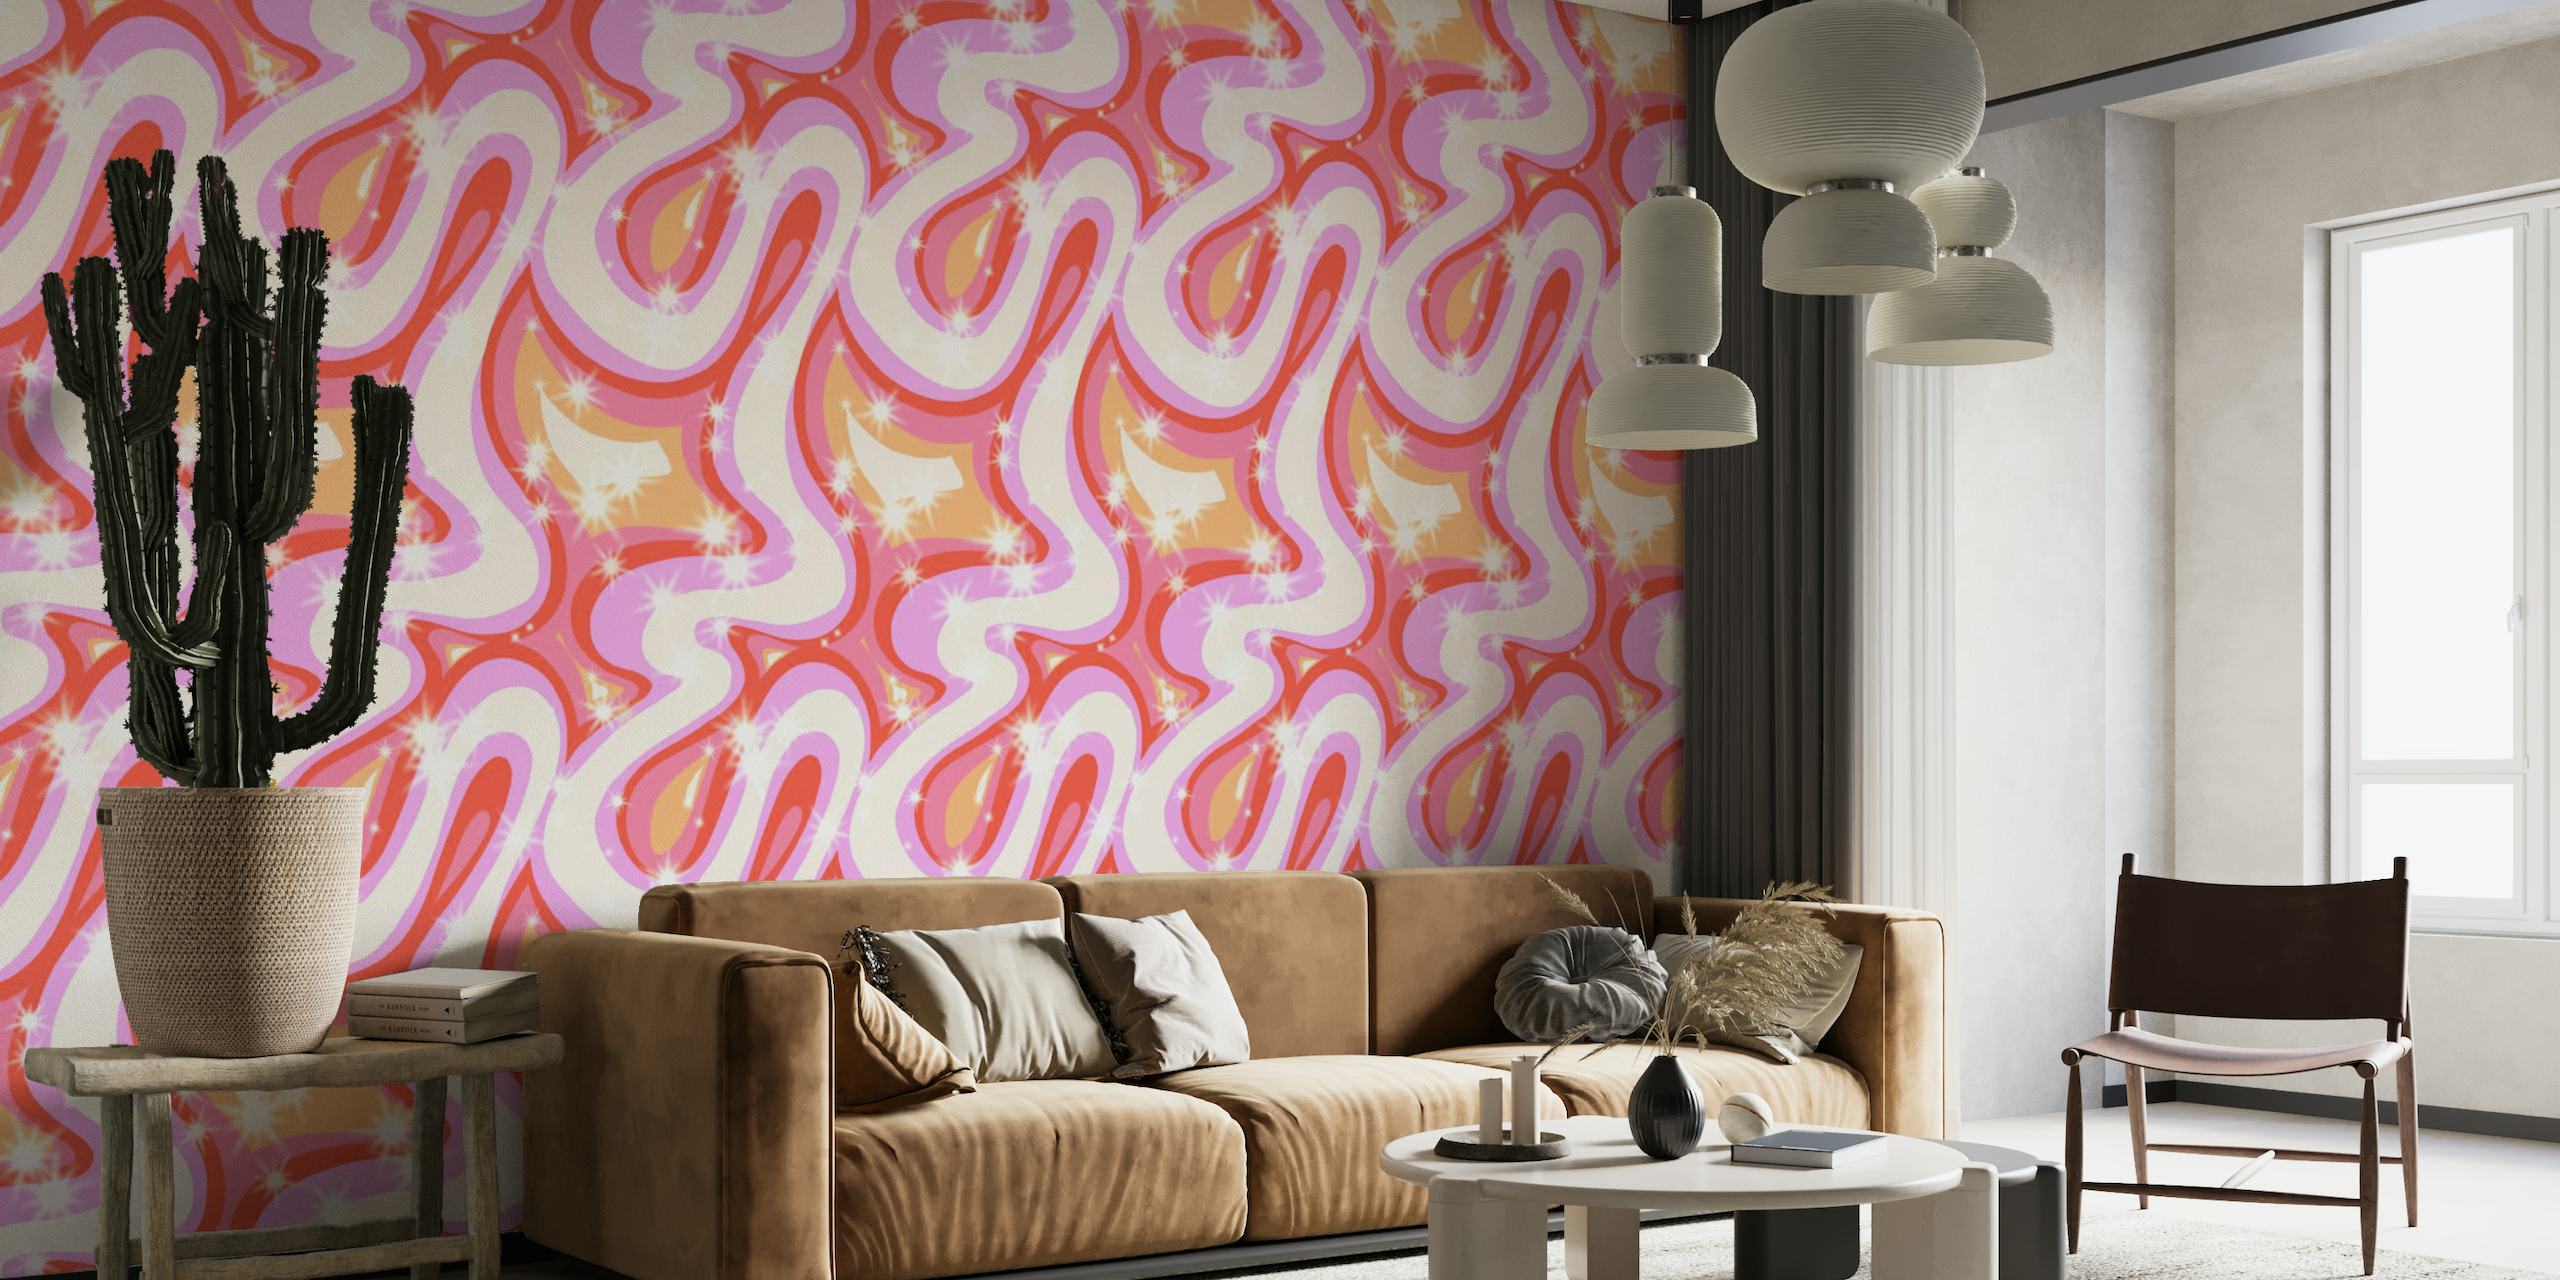 Groovy Party swirls pink wallpaper